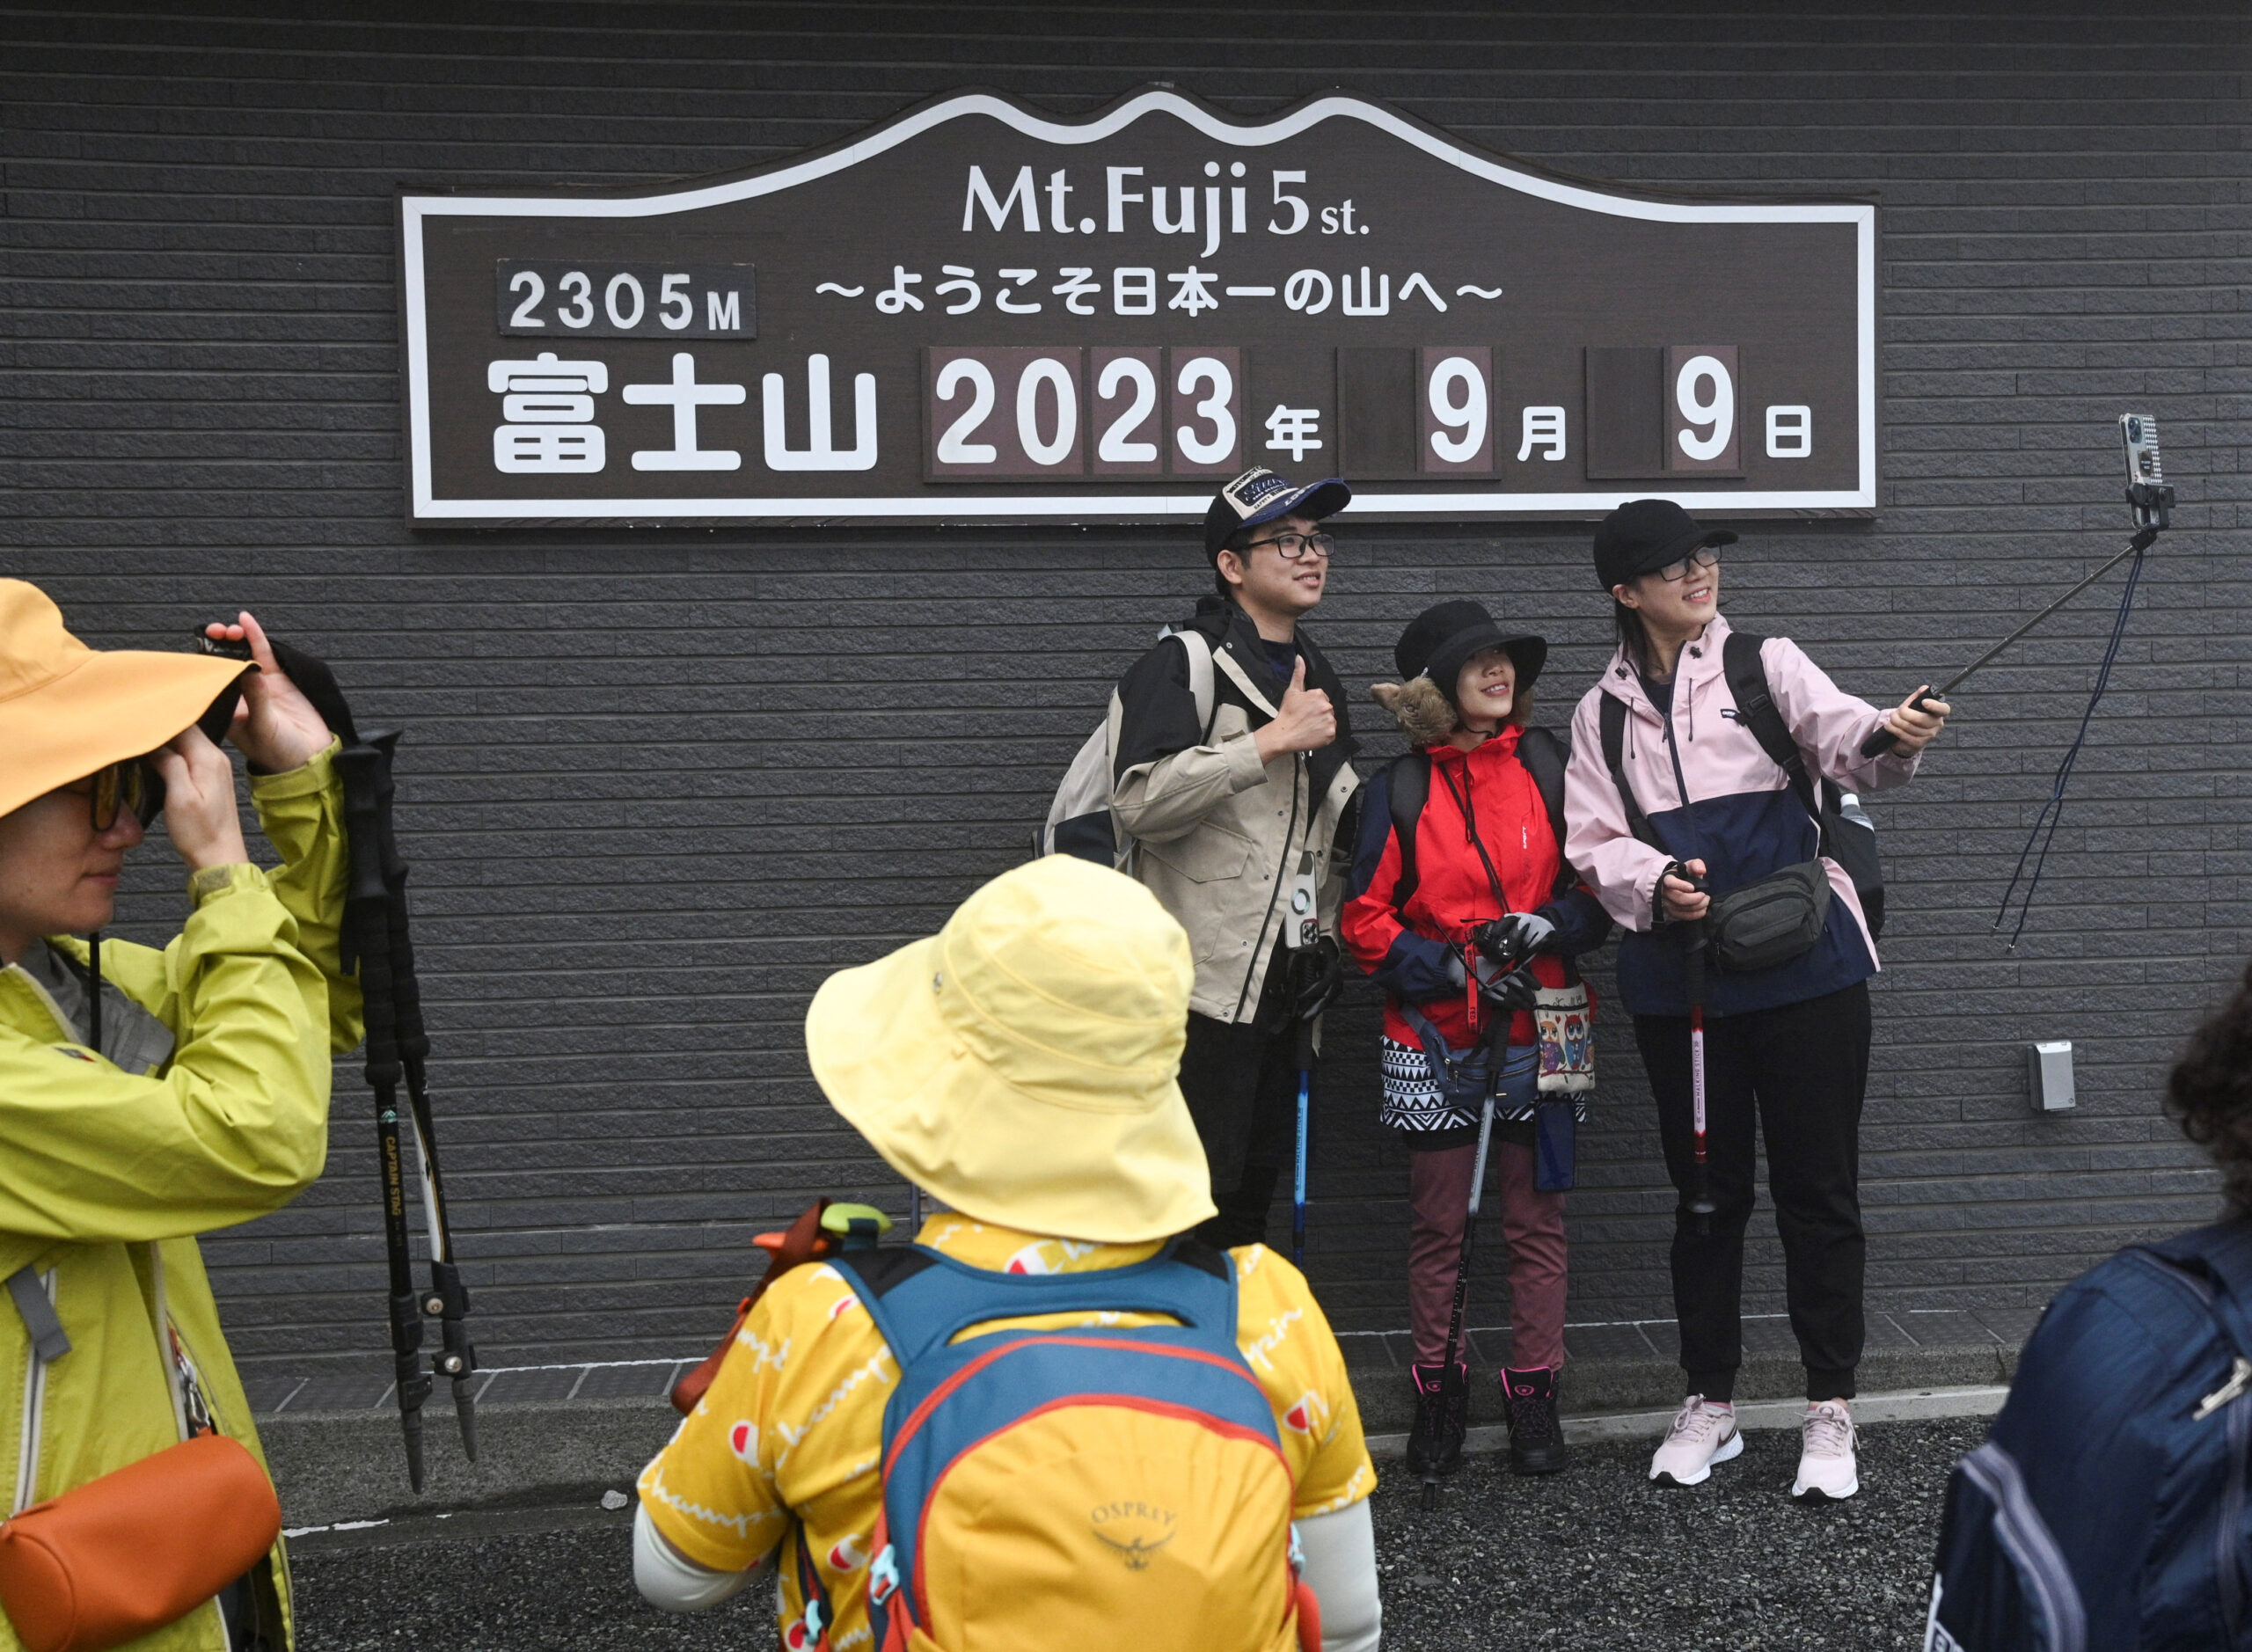 Japan says swarms of tourists defiling sacred Mt. Fuji